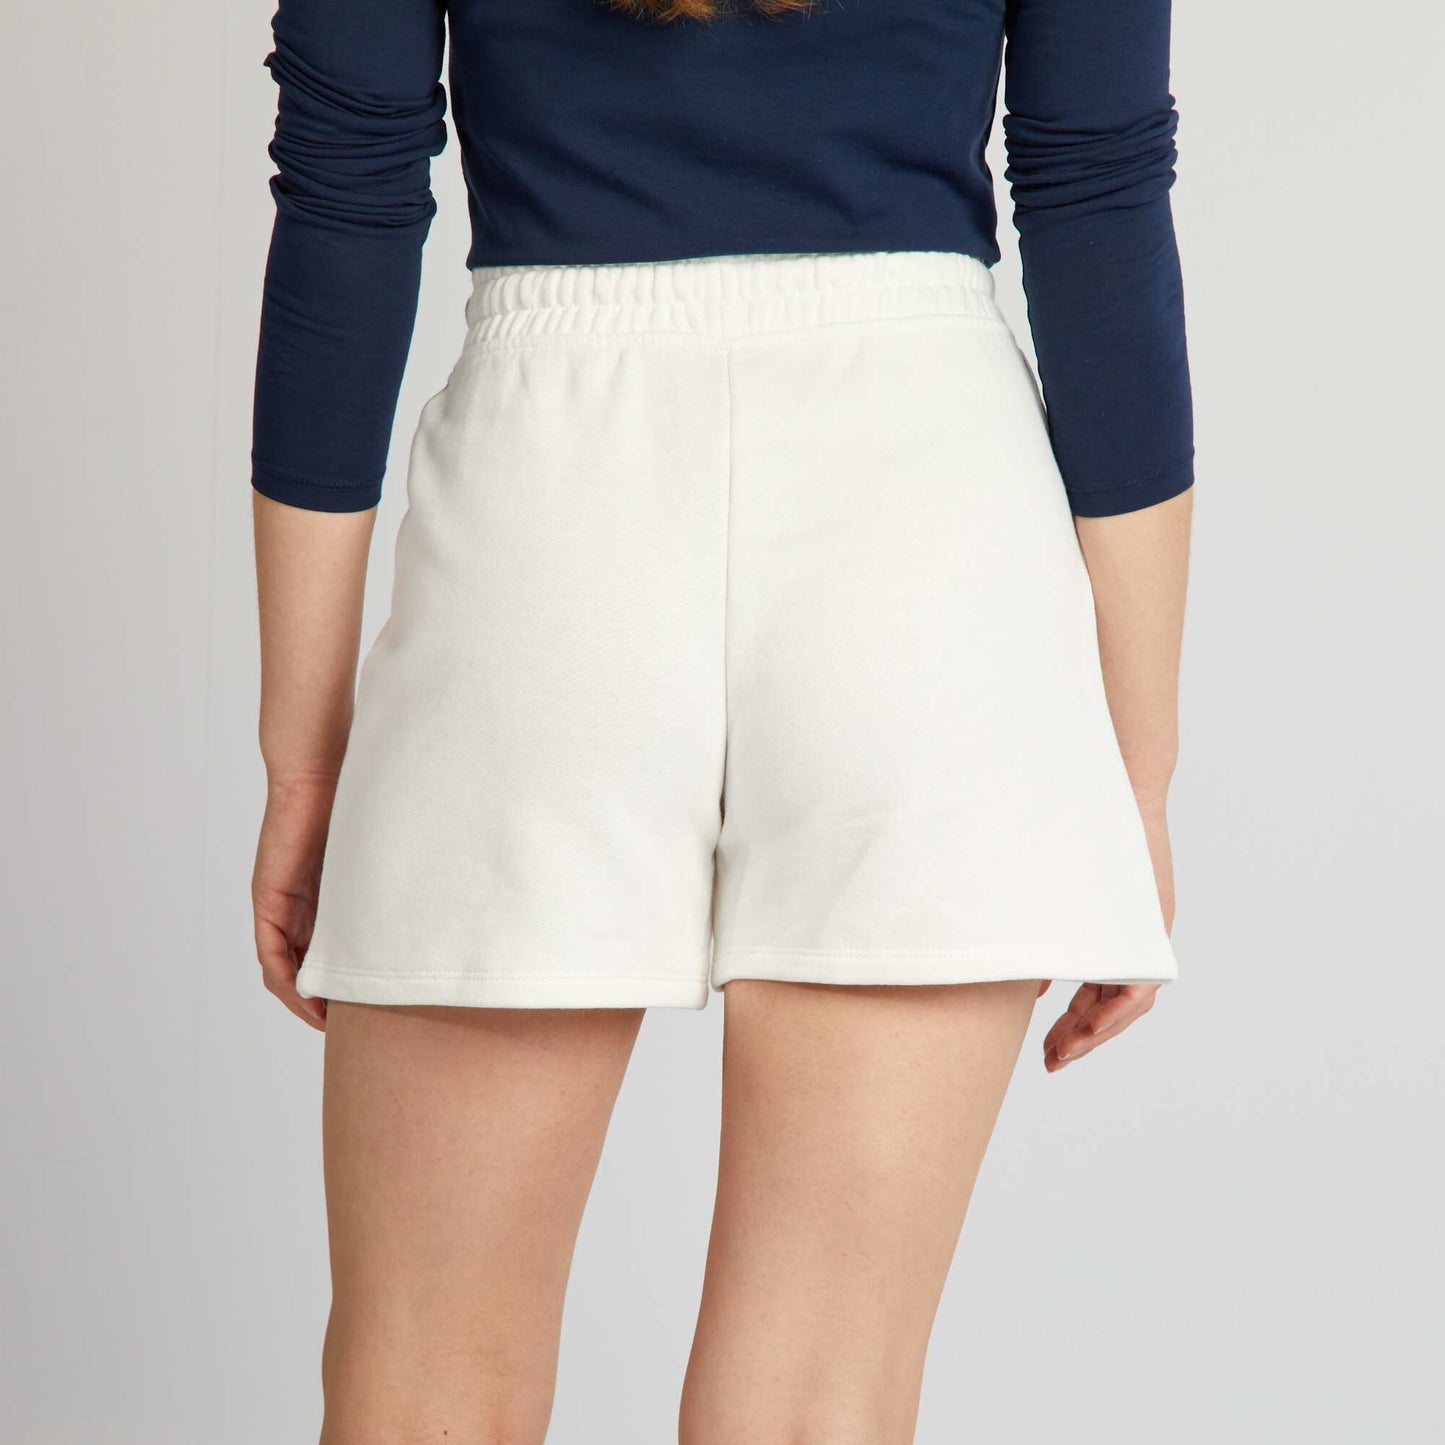 USA cotton shorts WHITE